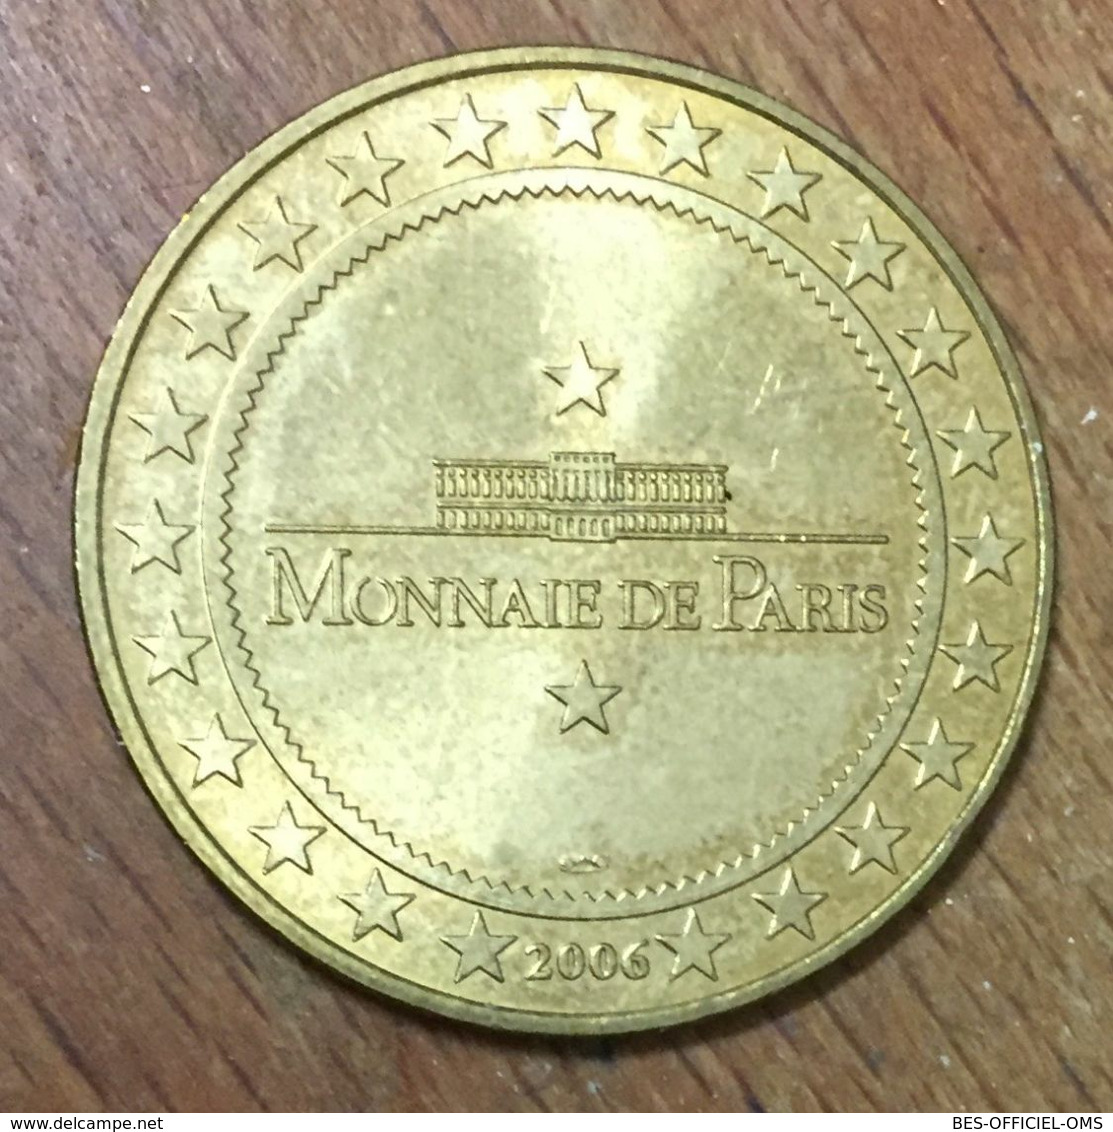 77 DISNEYLAND N°11 MICKEY WALT DISNEY STUDIOS MDP 2006 MÉDAILLE MONNAIE DE PARIS JETON TOURISTIQUE MEDALS COINS TOKENS - 2006